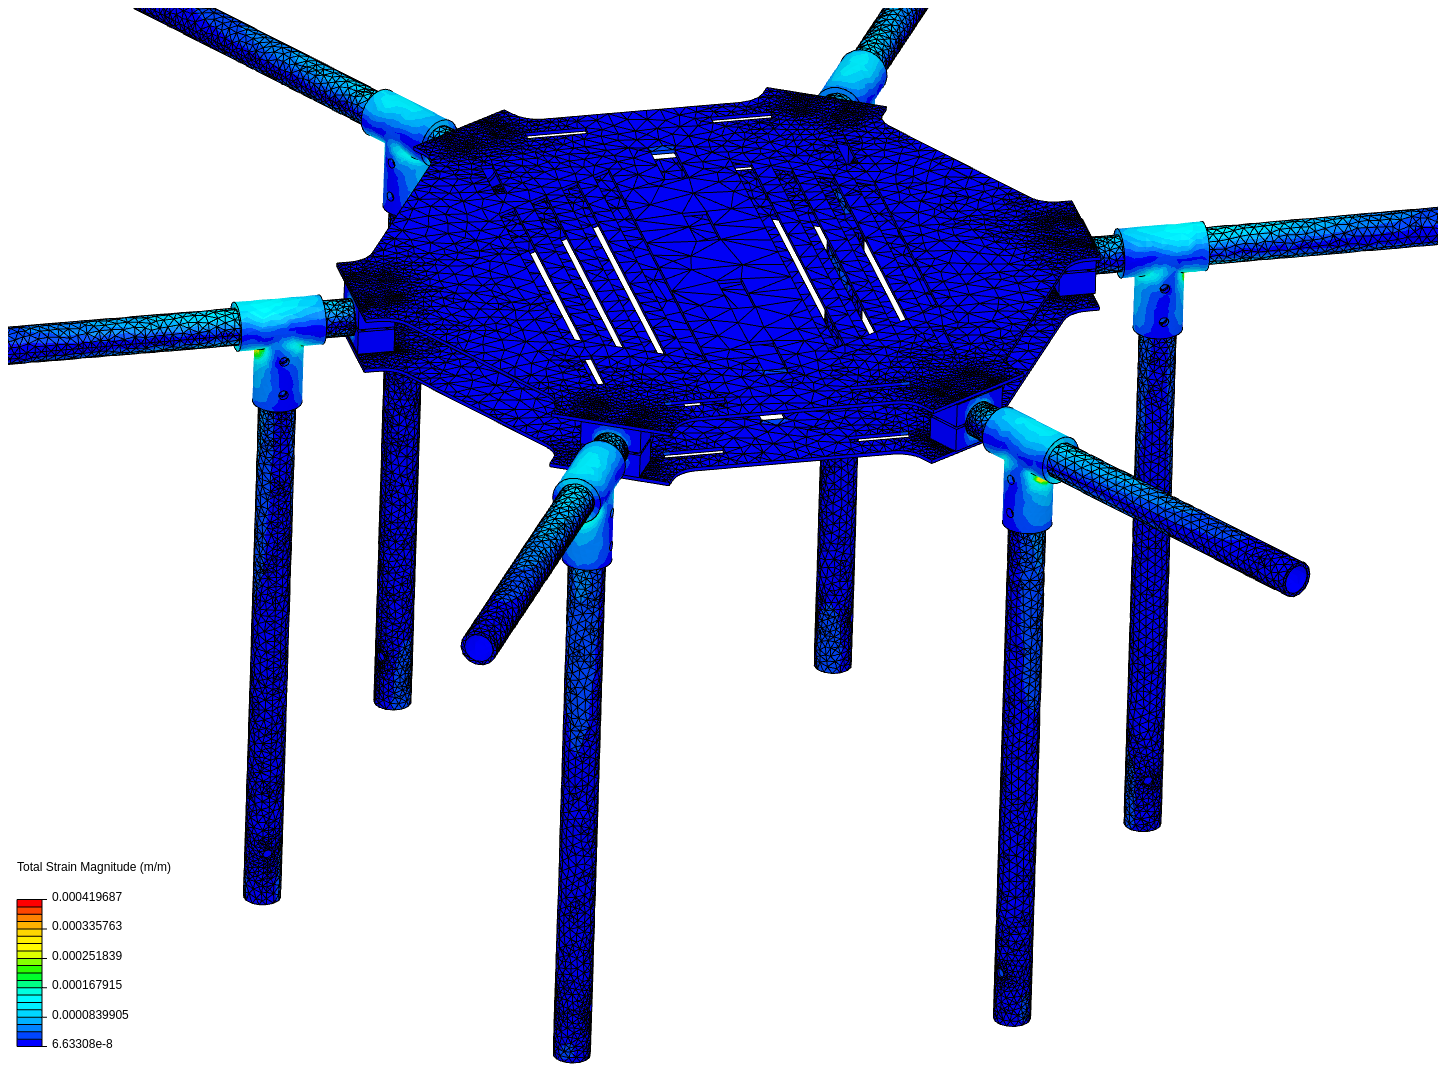 KALAM drone image